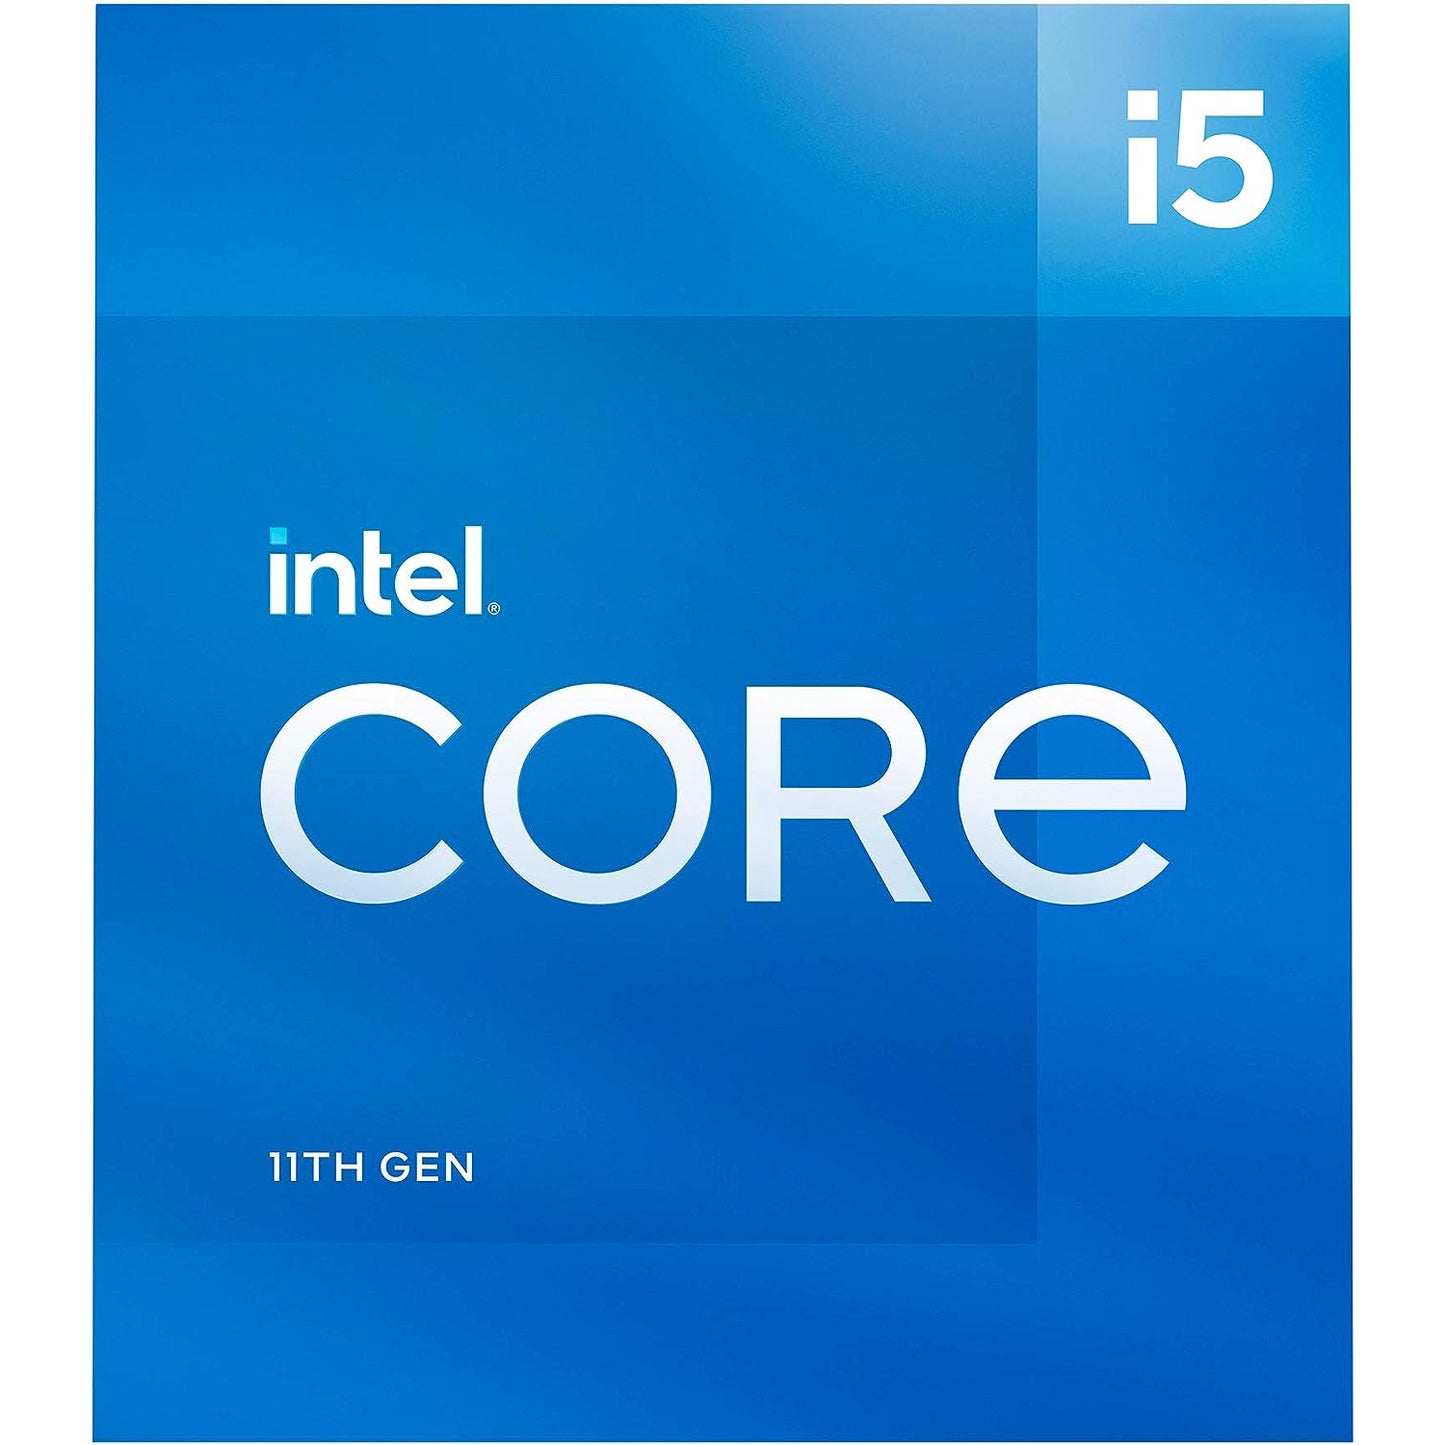 Intel Core i5-11500 | 11th Gen Processor